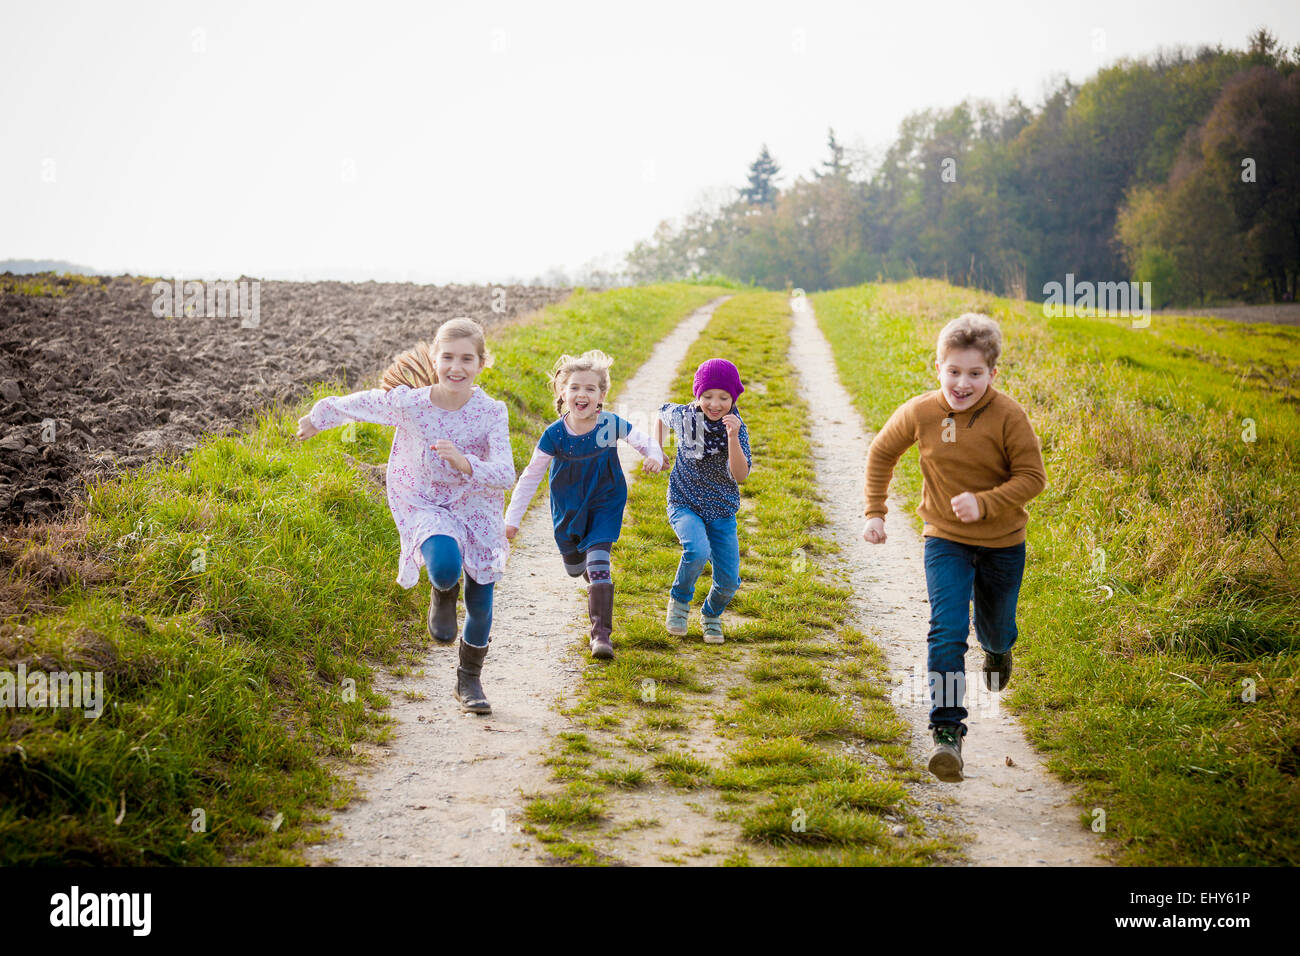 Children running on path Stock Photo